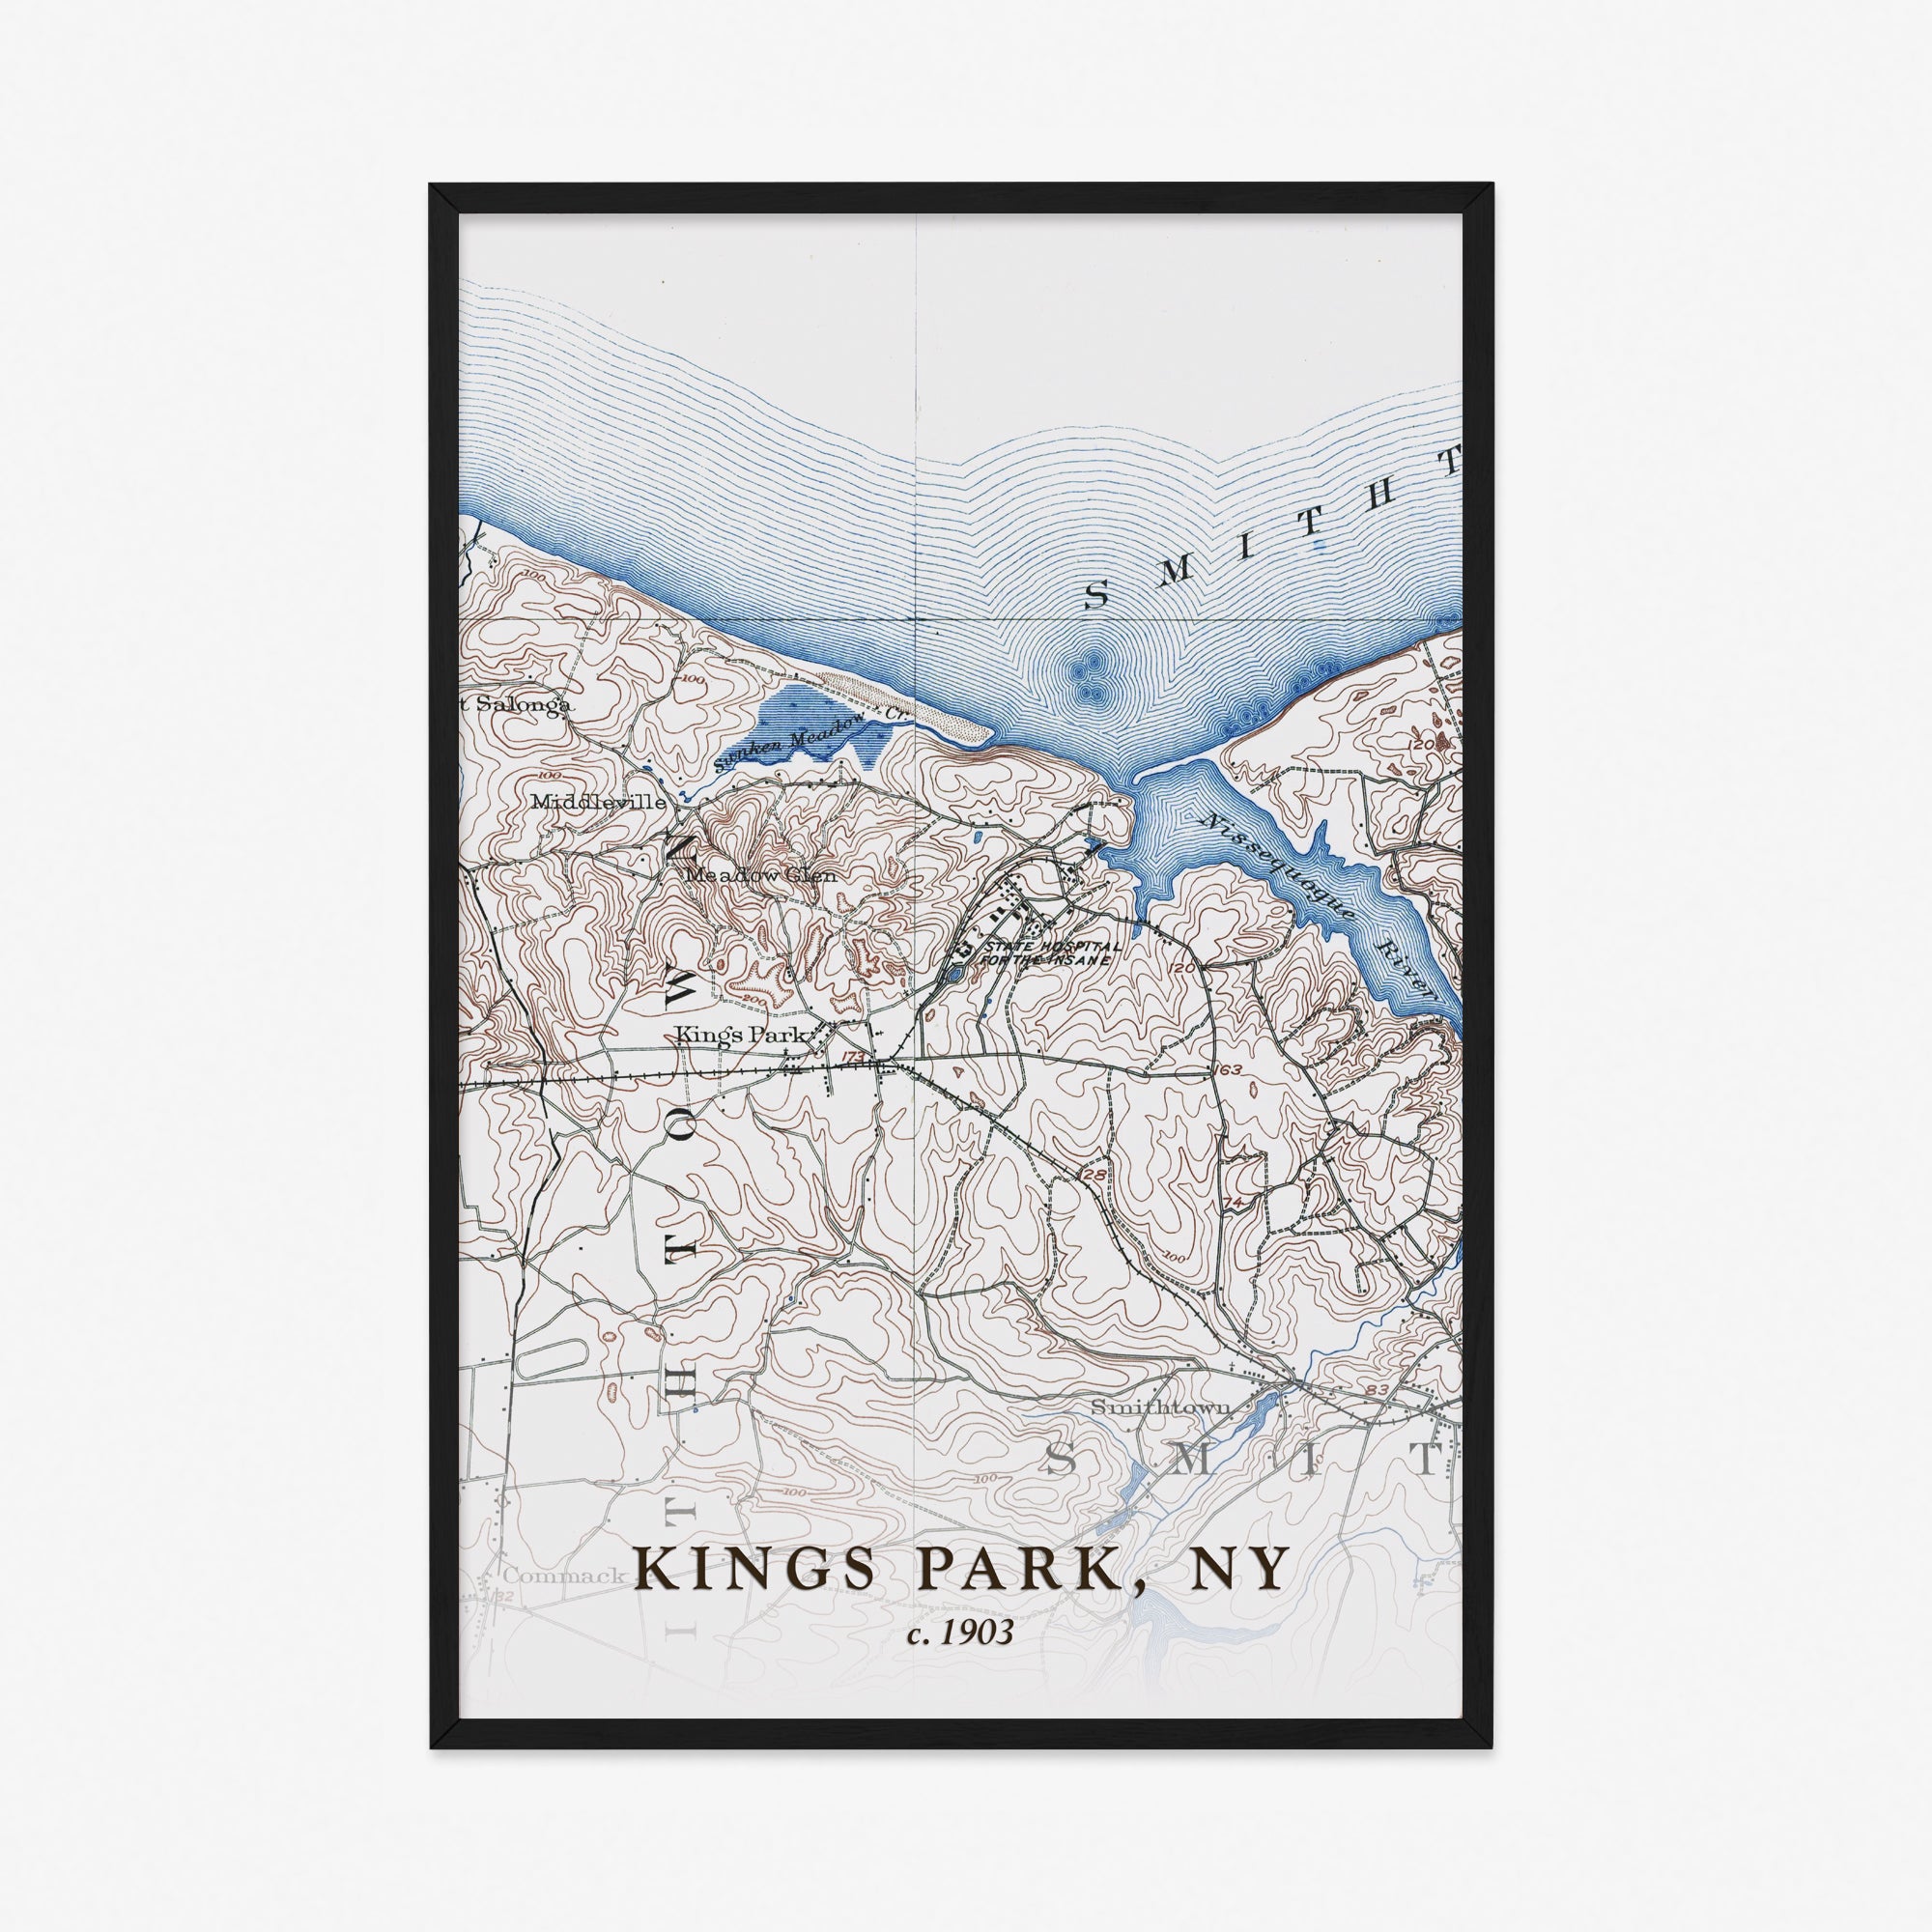 Kings Park, NY - 1903 Topographic Map